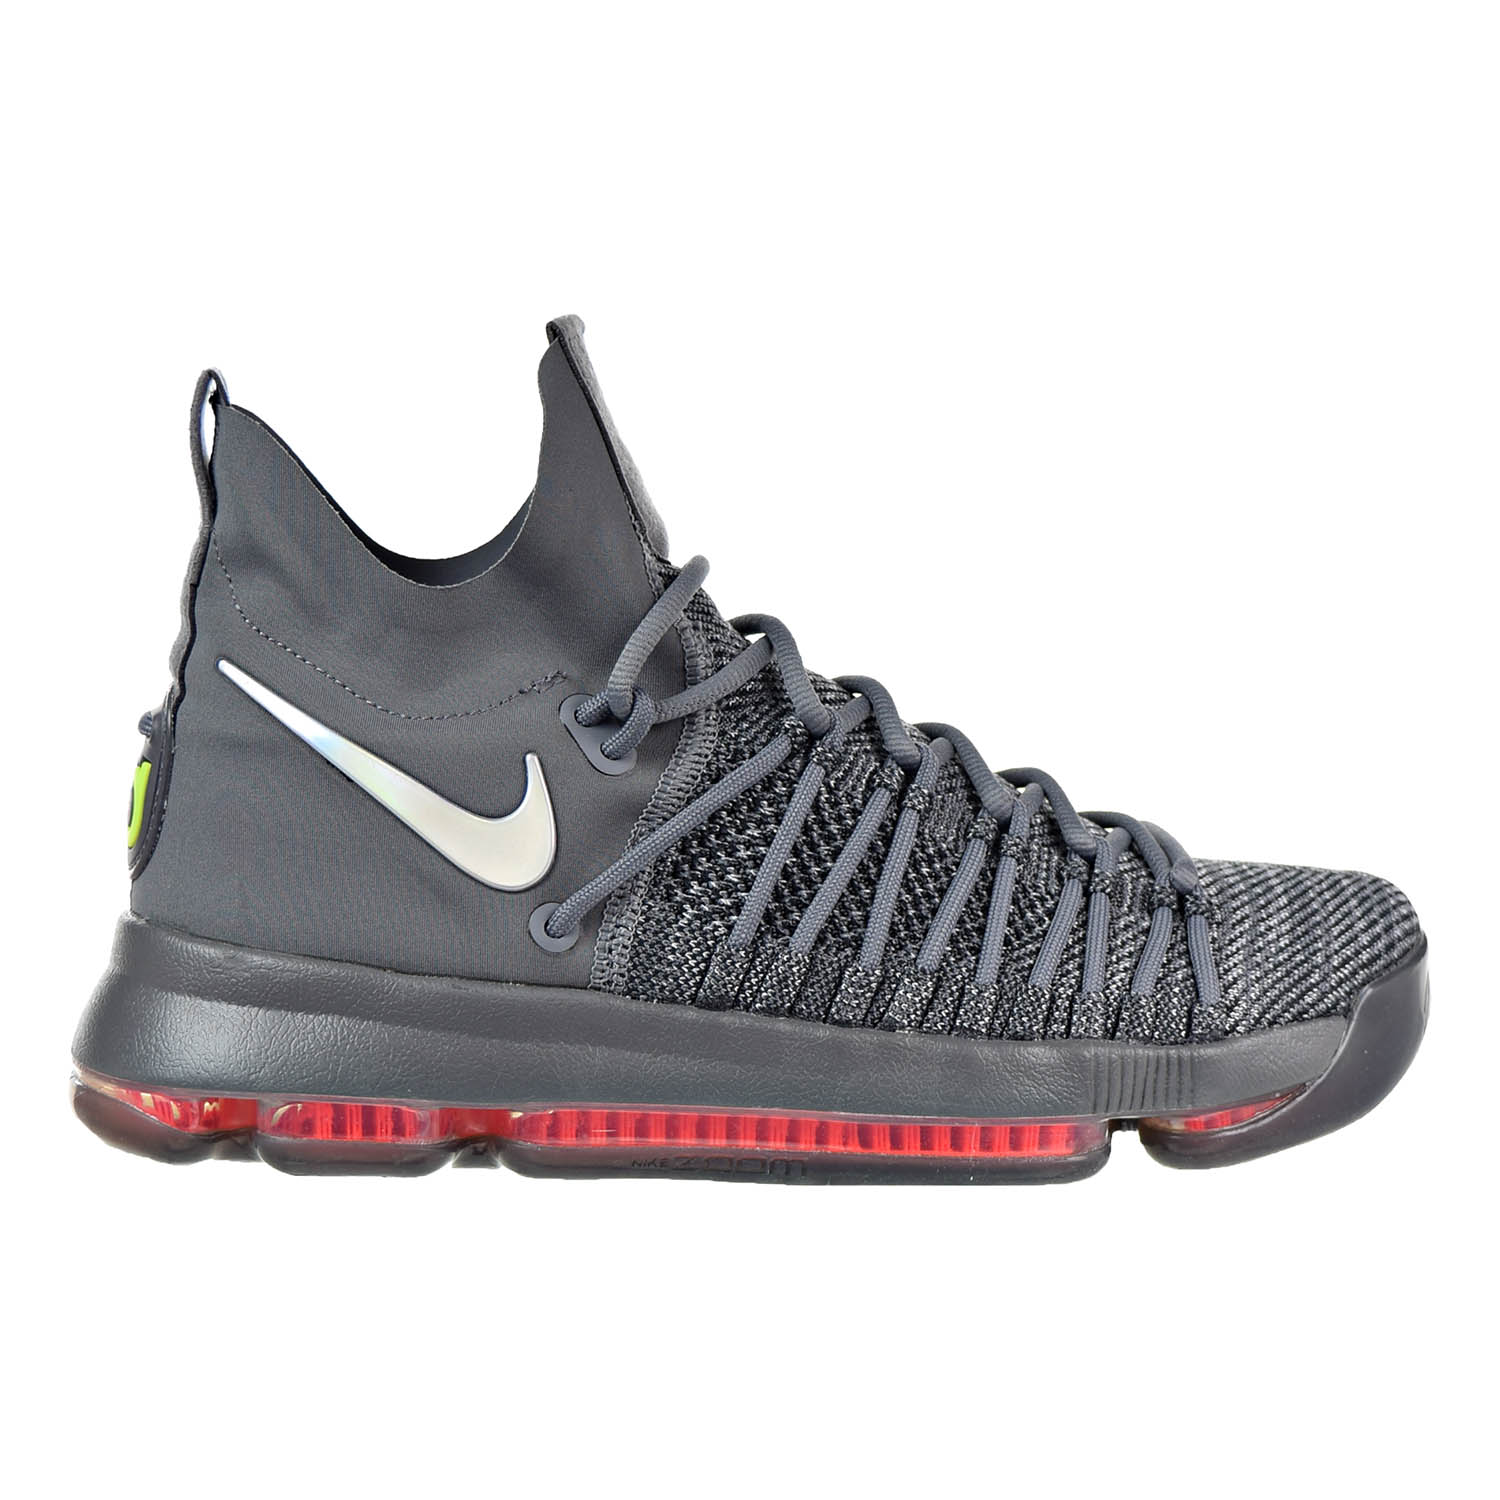 Nike Zoom KD 9 Men's Shoe Dark Grey/Hyper Jade/Sail 909139-013 (10 D(M) US)